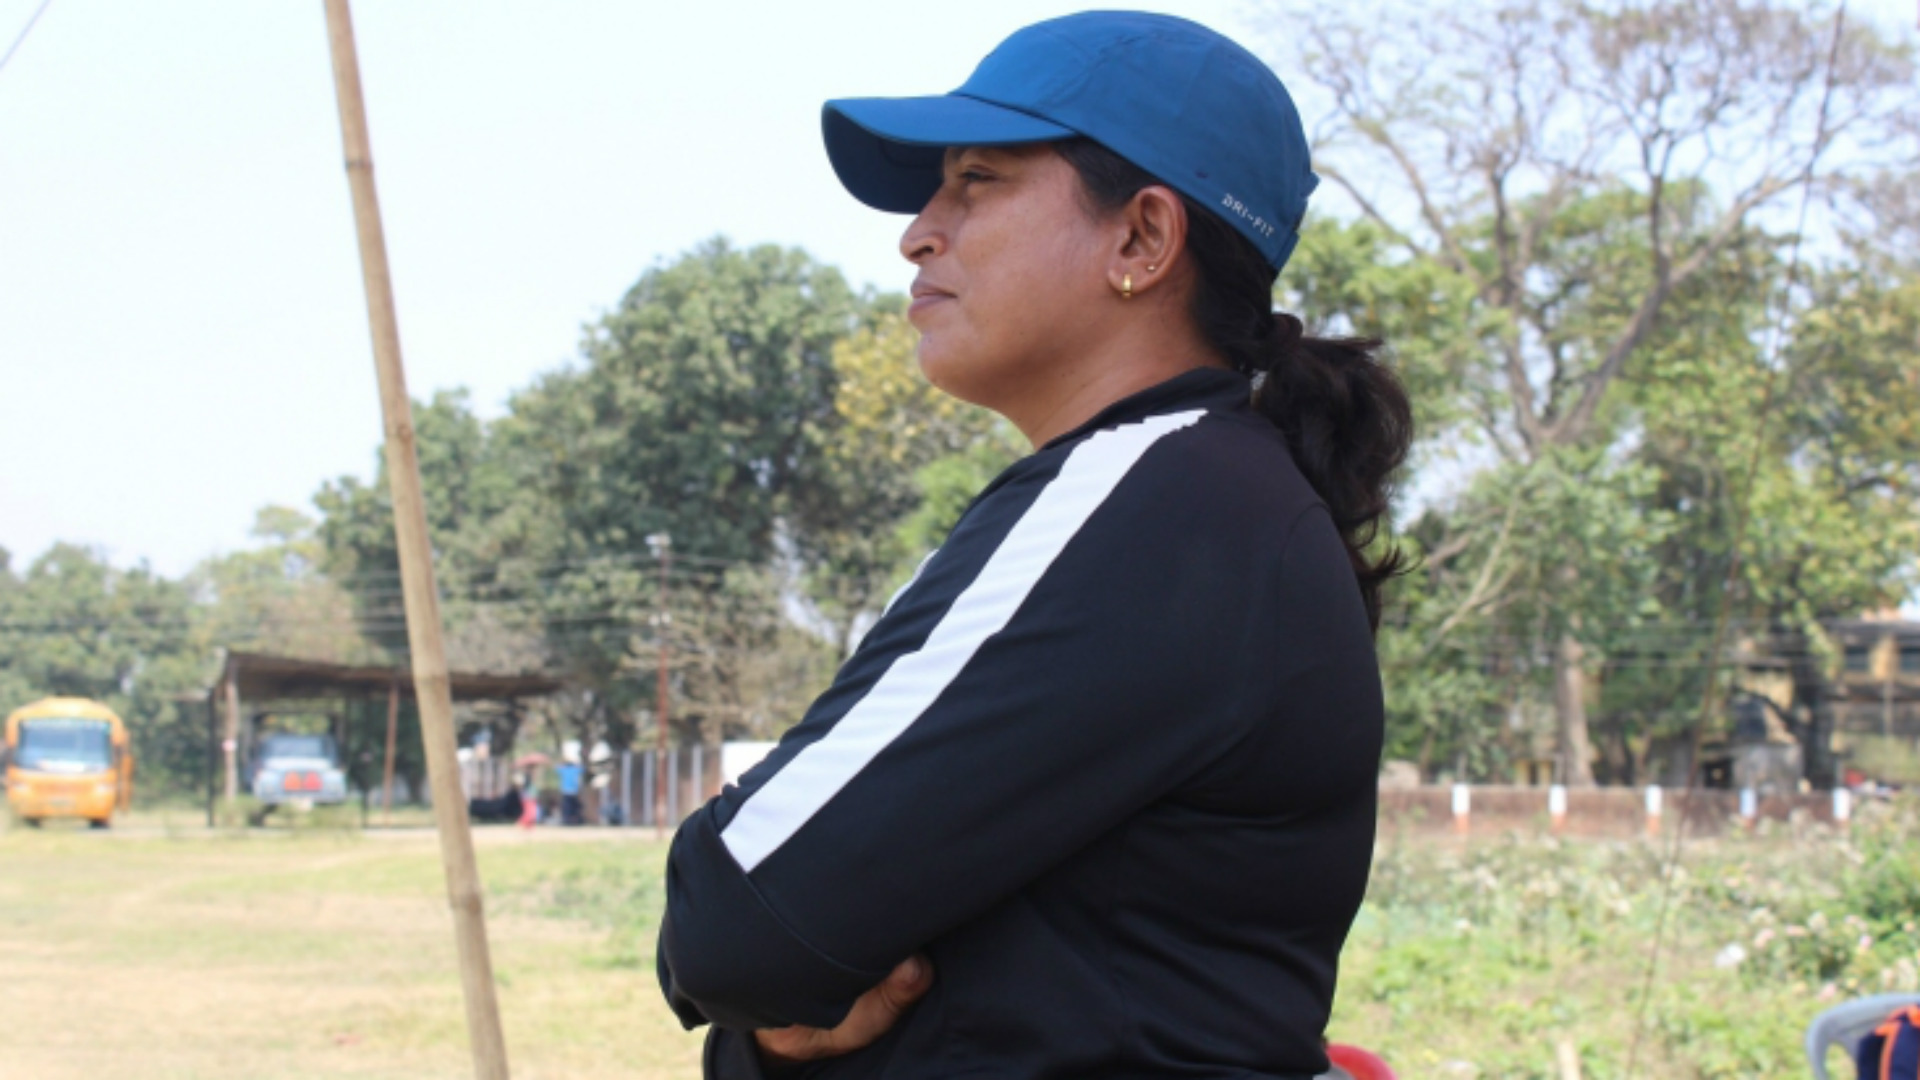 Maymol Rocky Indian women's national team